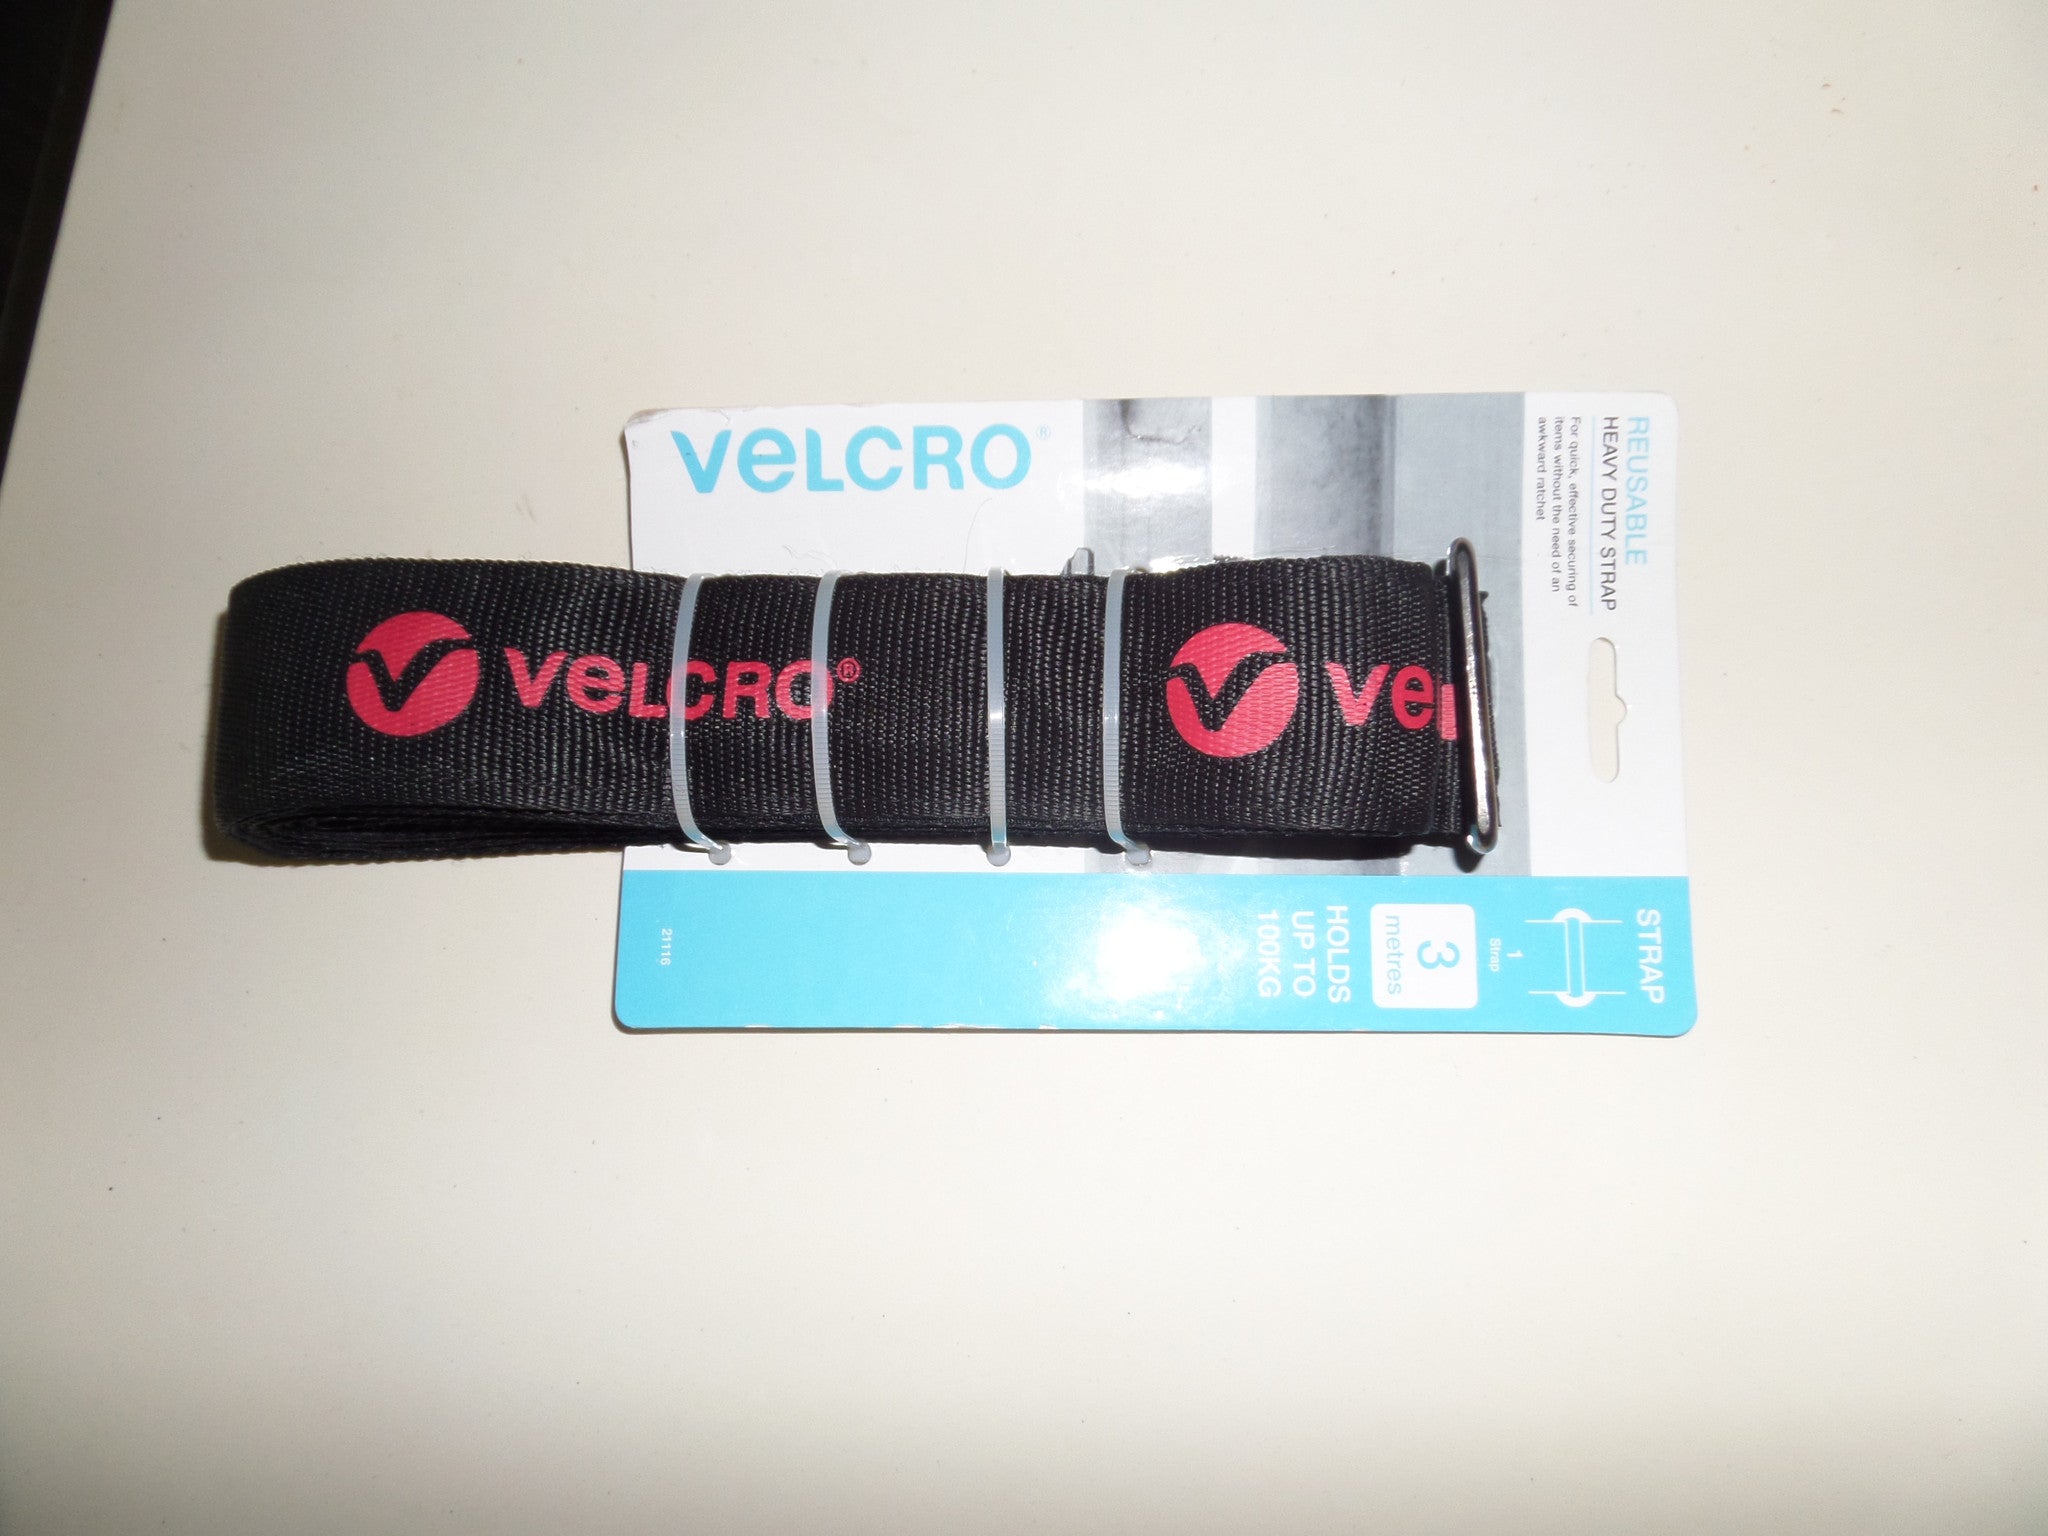 Velcro Brand Heavy Duty Hold Down